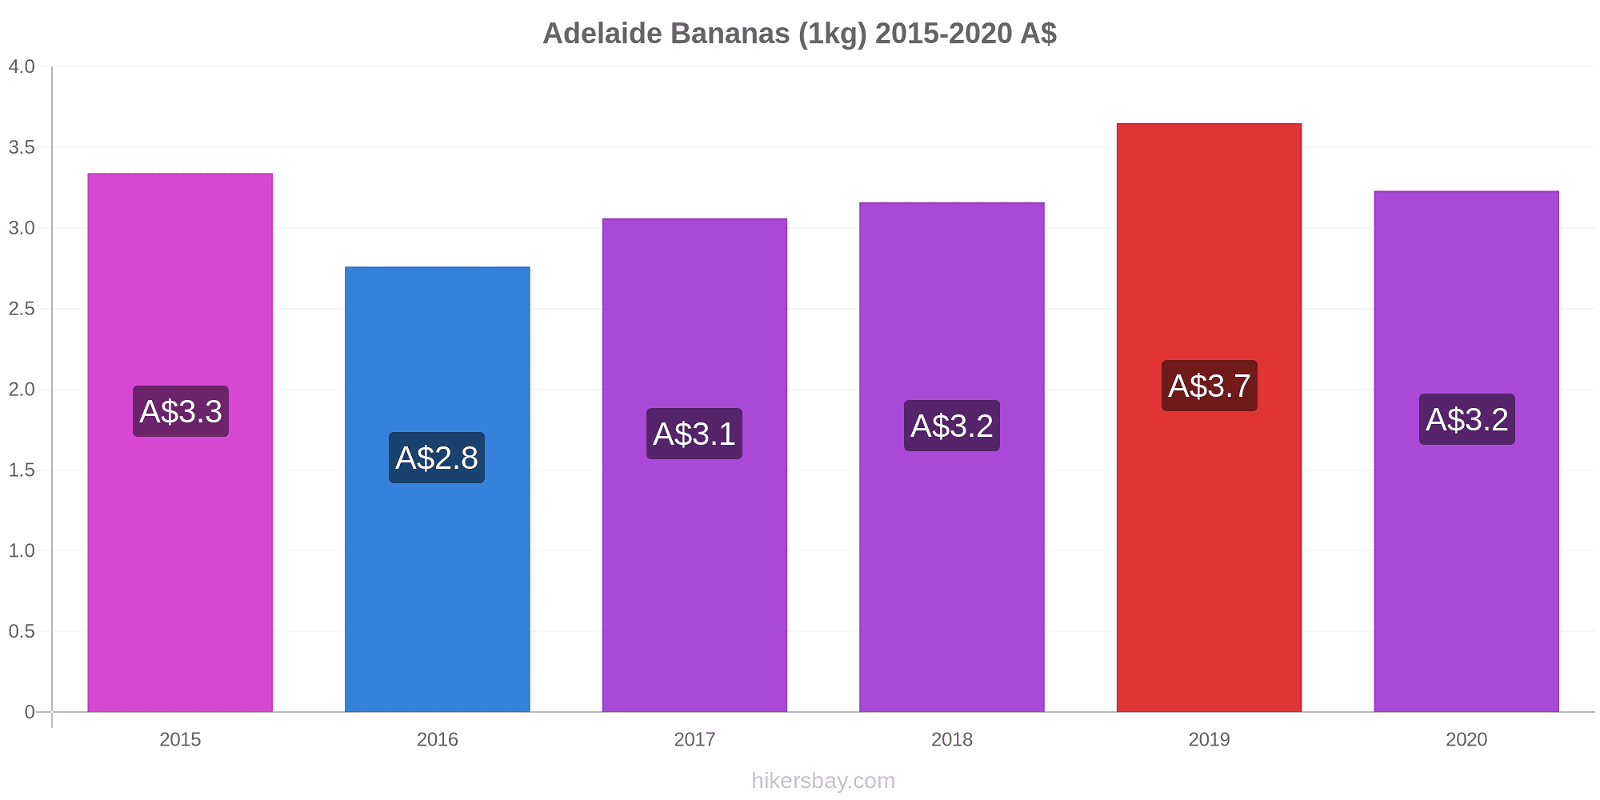 Adelaide price changes Bananas (1kg) hikersbay.com